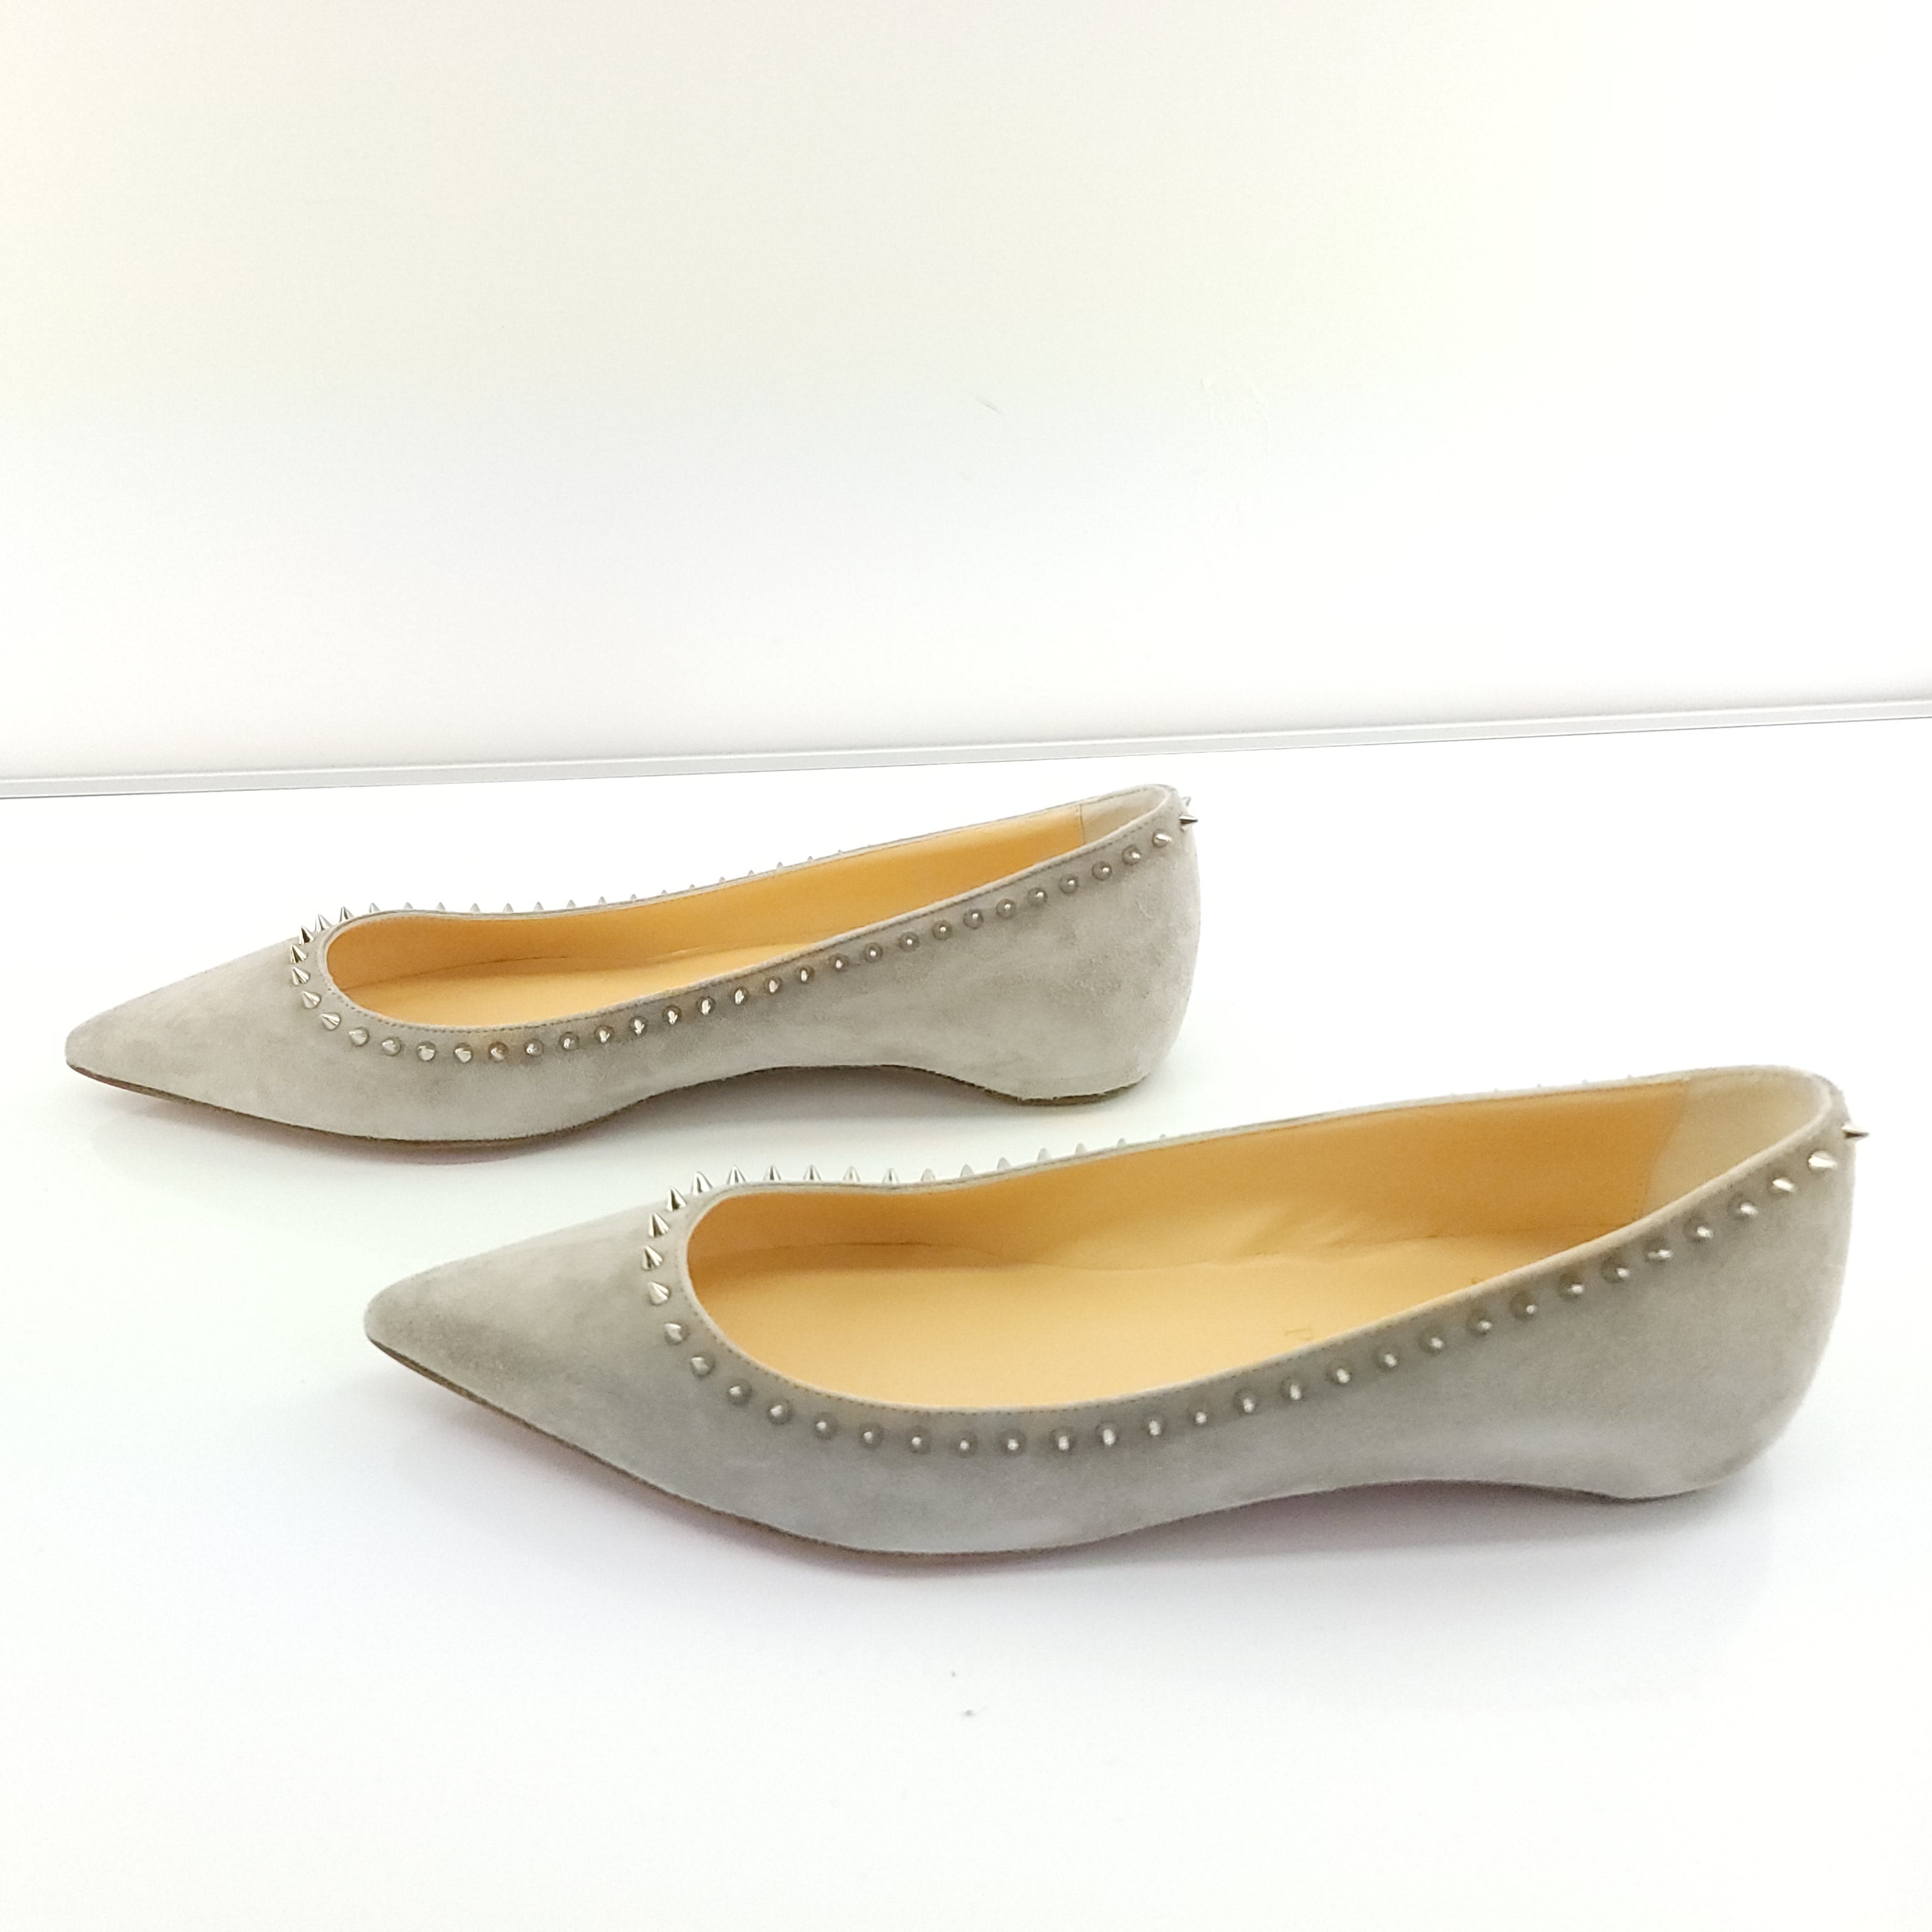 Christian Louboutin Grey Silver Anjalina Pointed Toe Flats Size 38 NIB $845